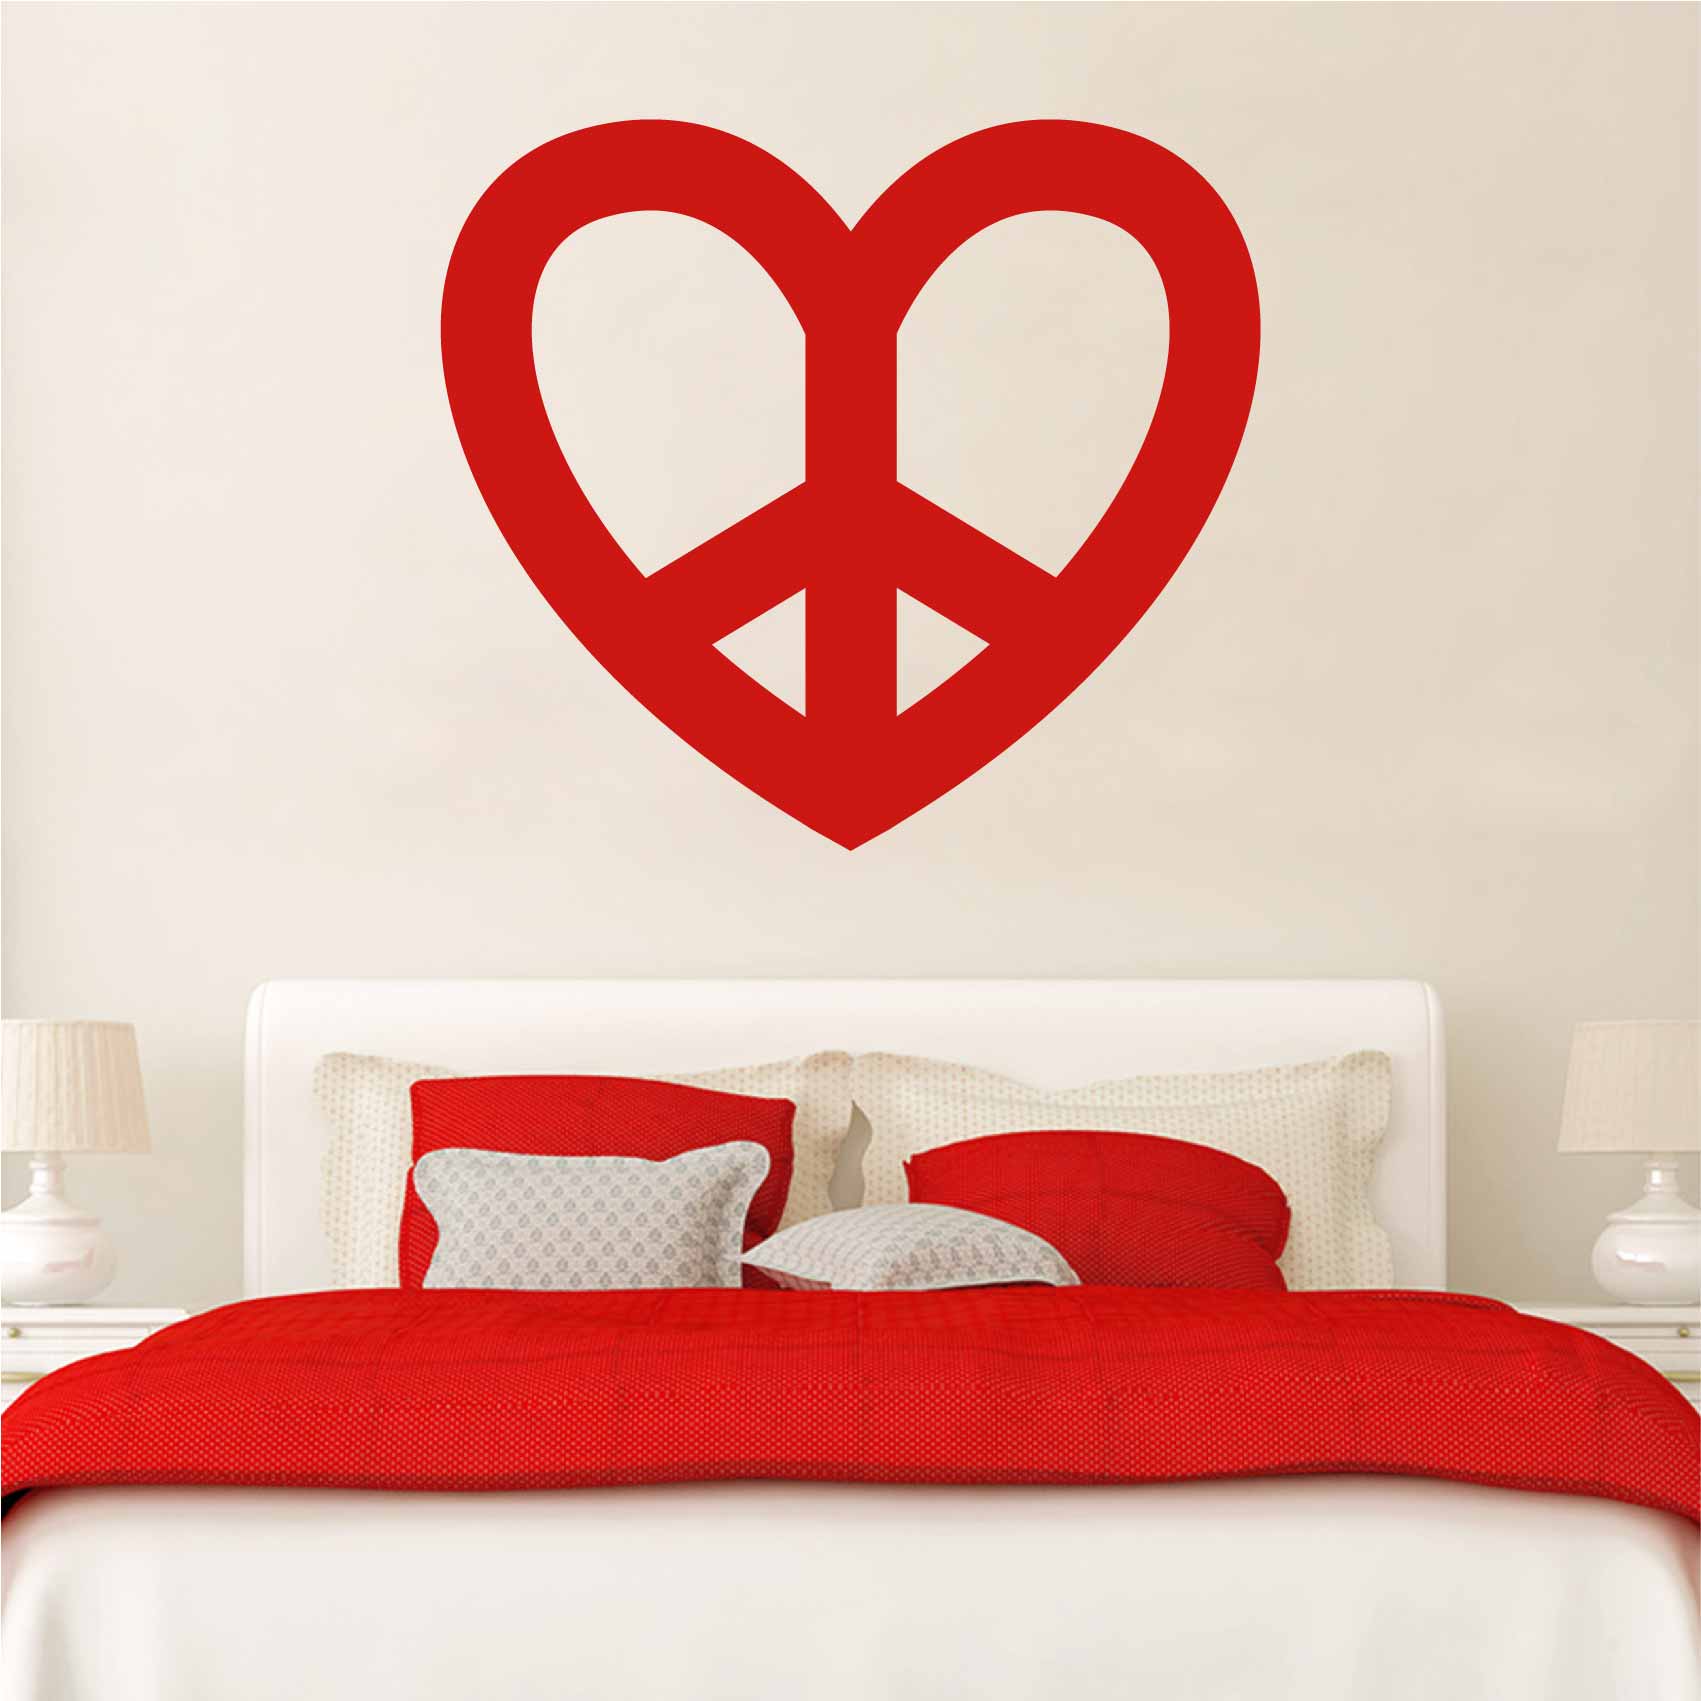 stickers-coeur-peace-and-love-ref20spirituel-stickers-muraux-spirituel-et-religieux-autocollant-salon-chambre-cuisine-sticker-mural-spiritualité